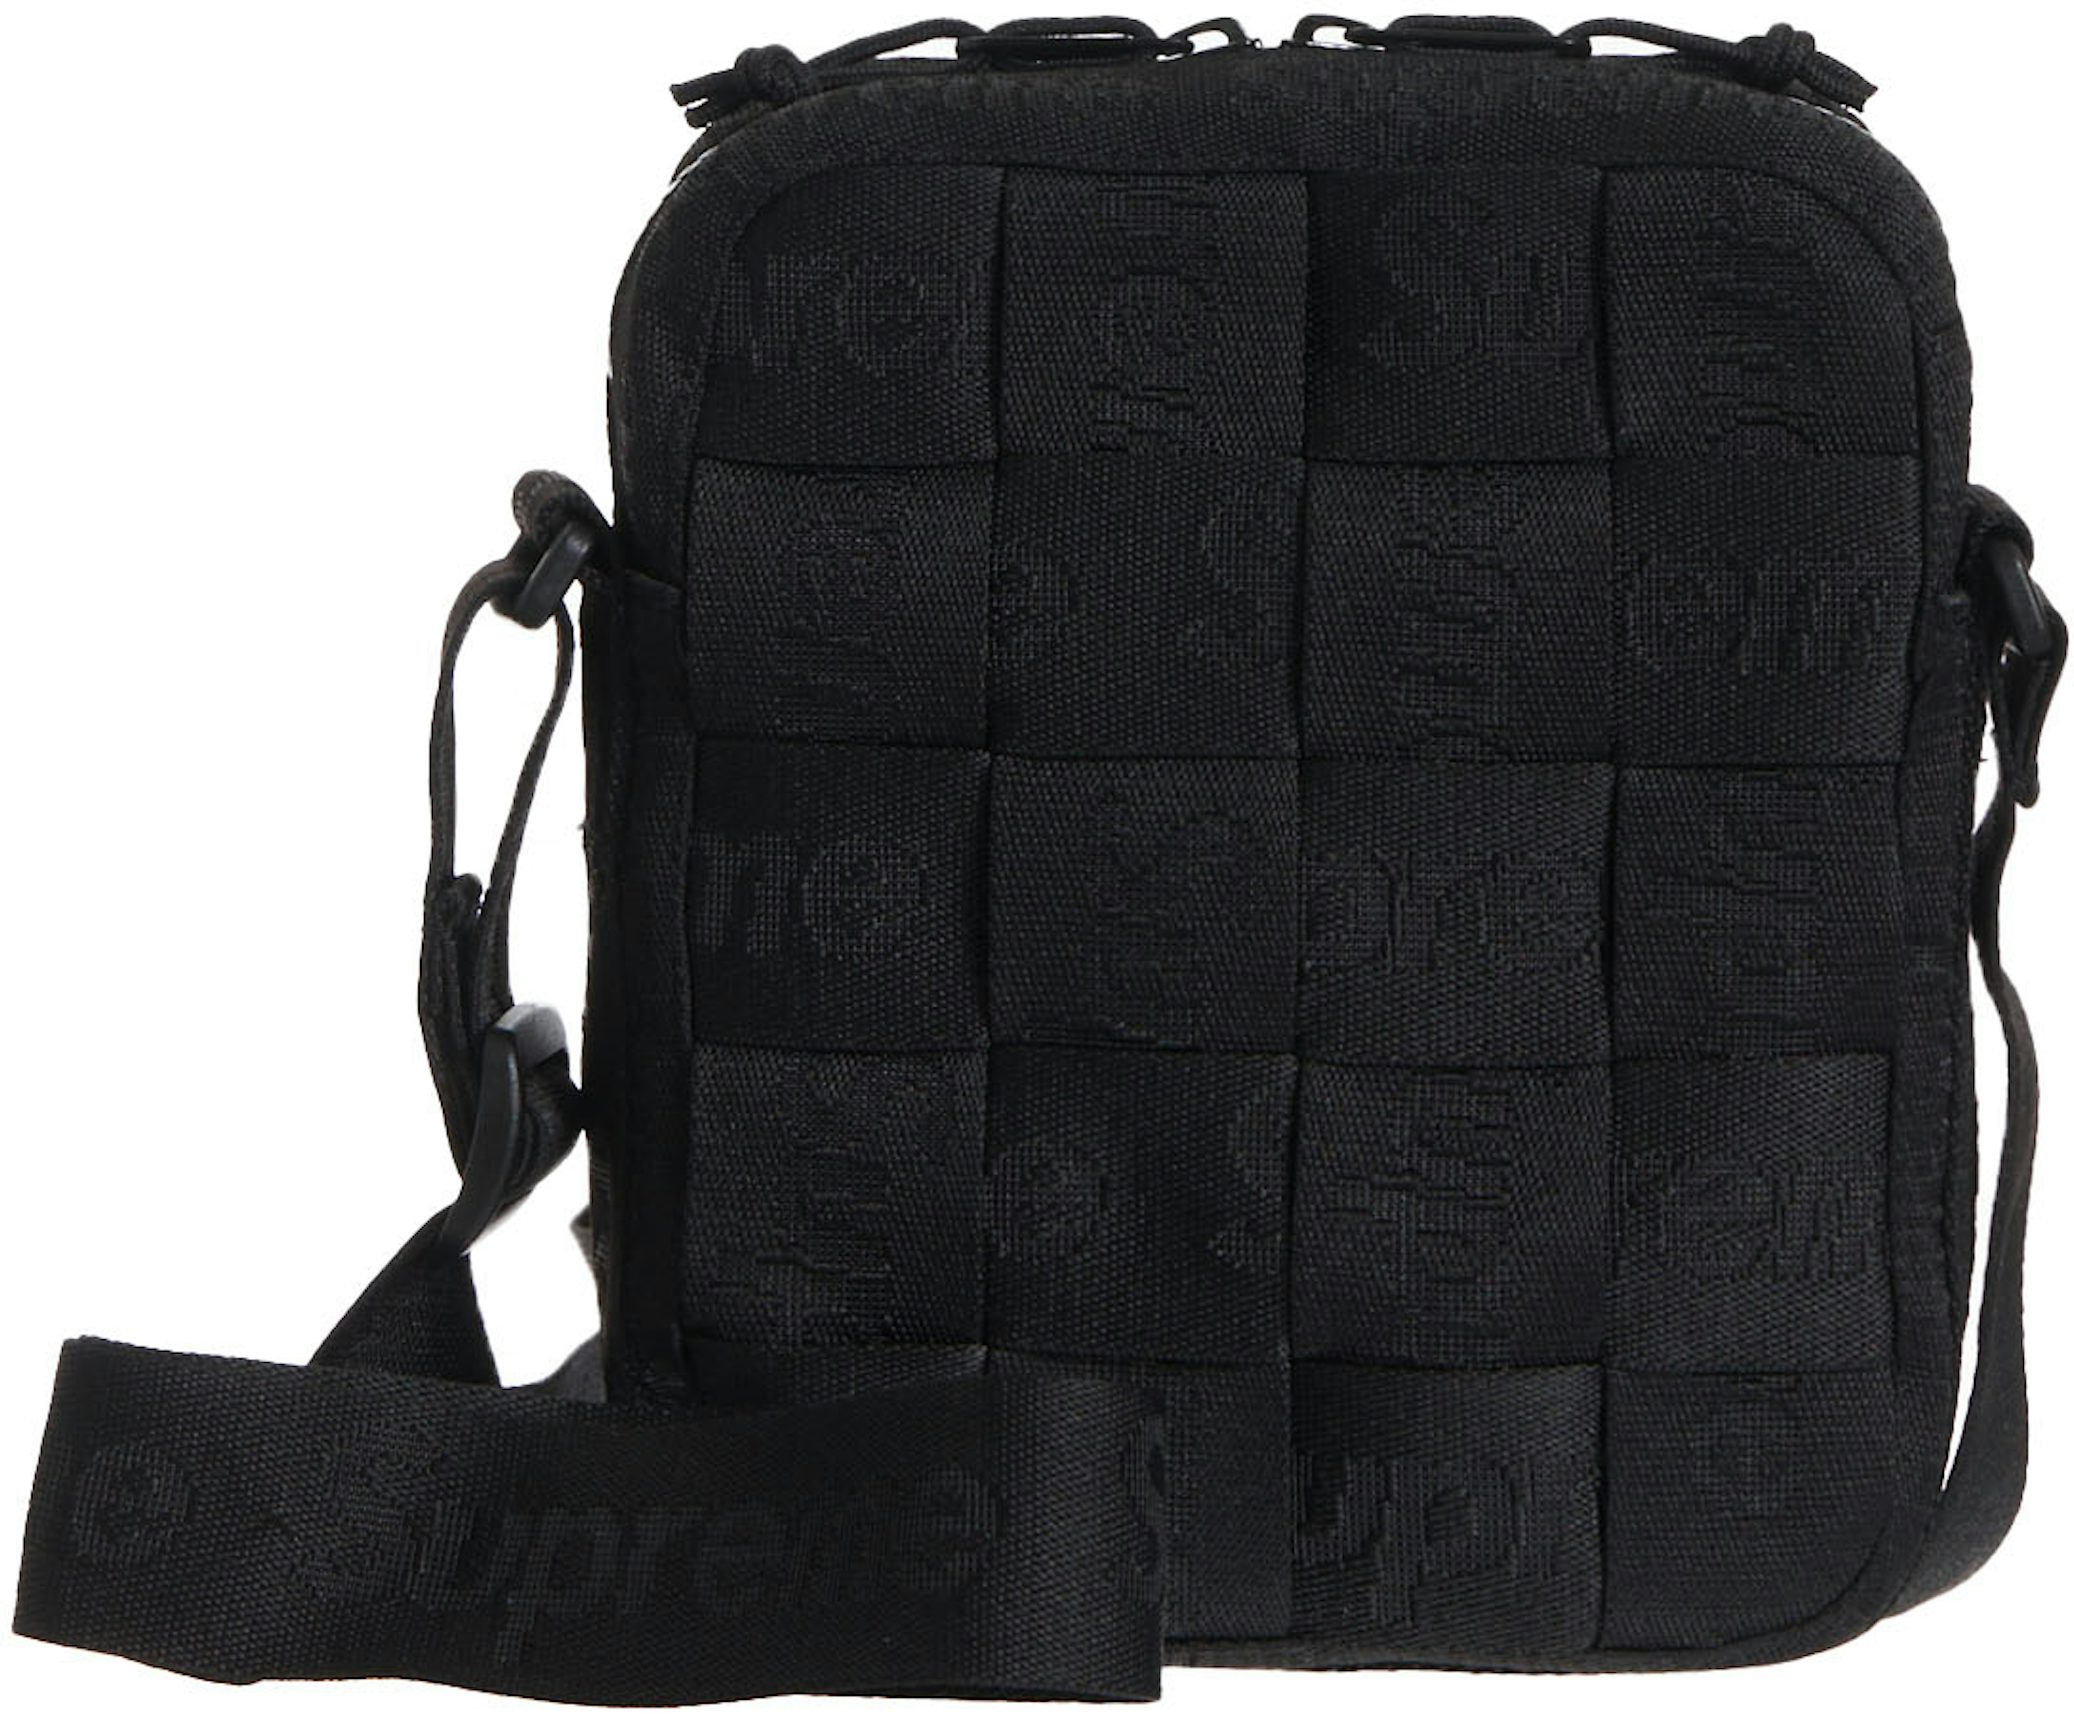 Carhartt Legacy Black Shoulder Bag  Black shoulder bag, Bags, 50th clothes